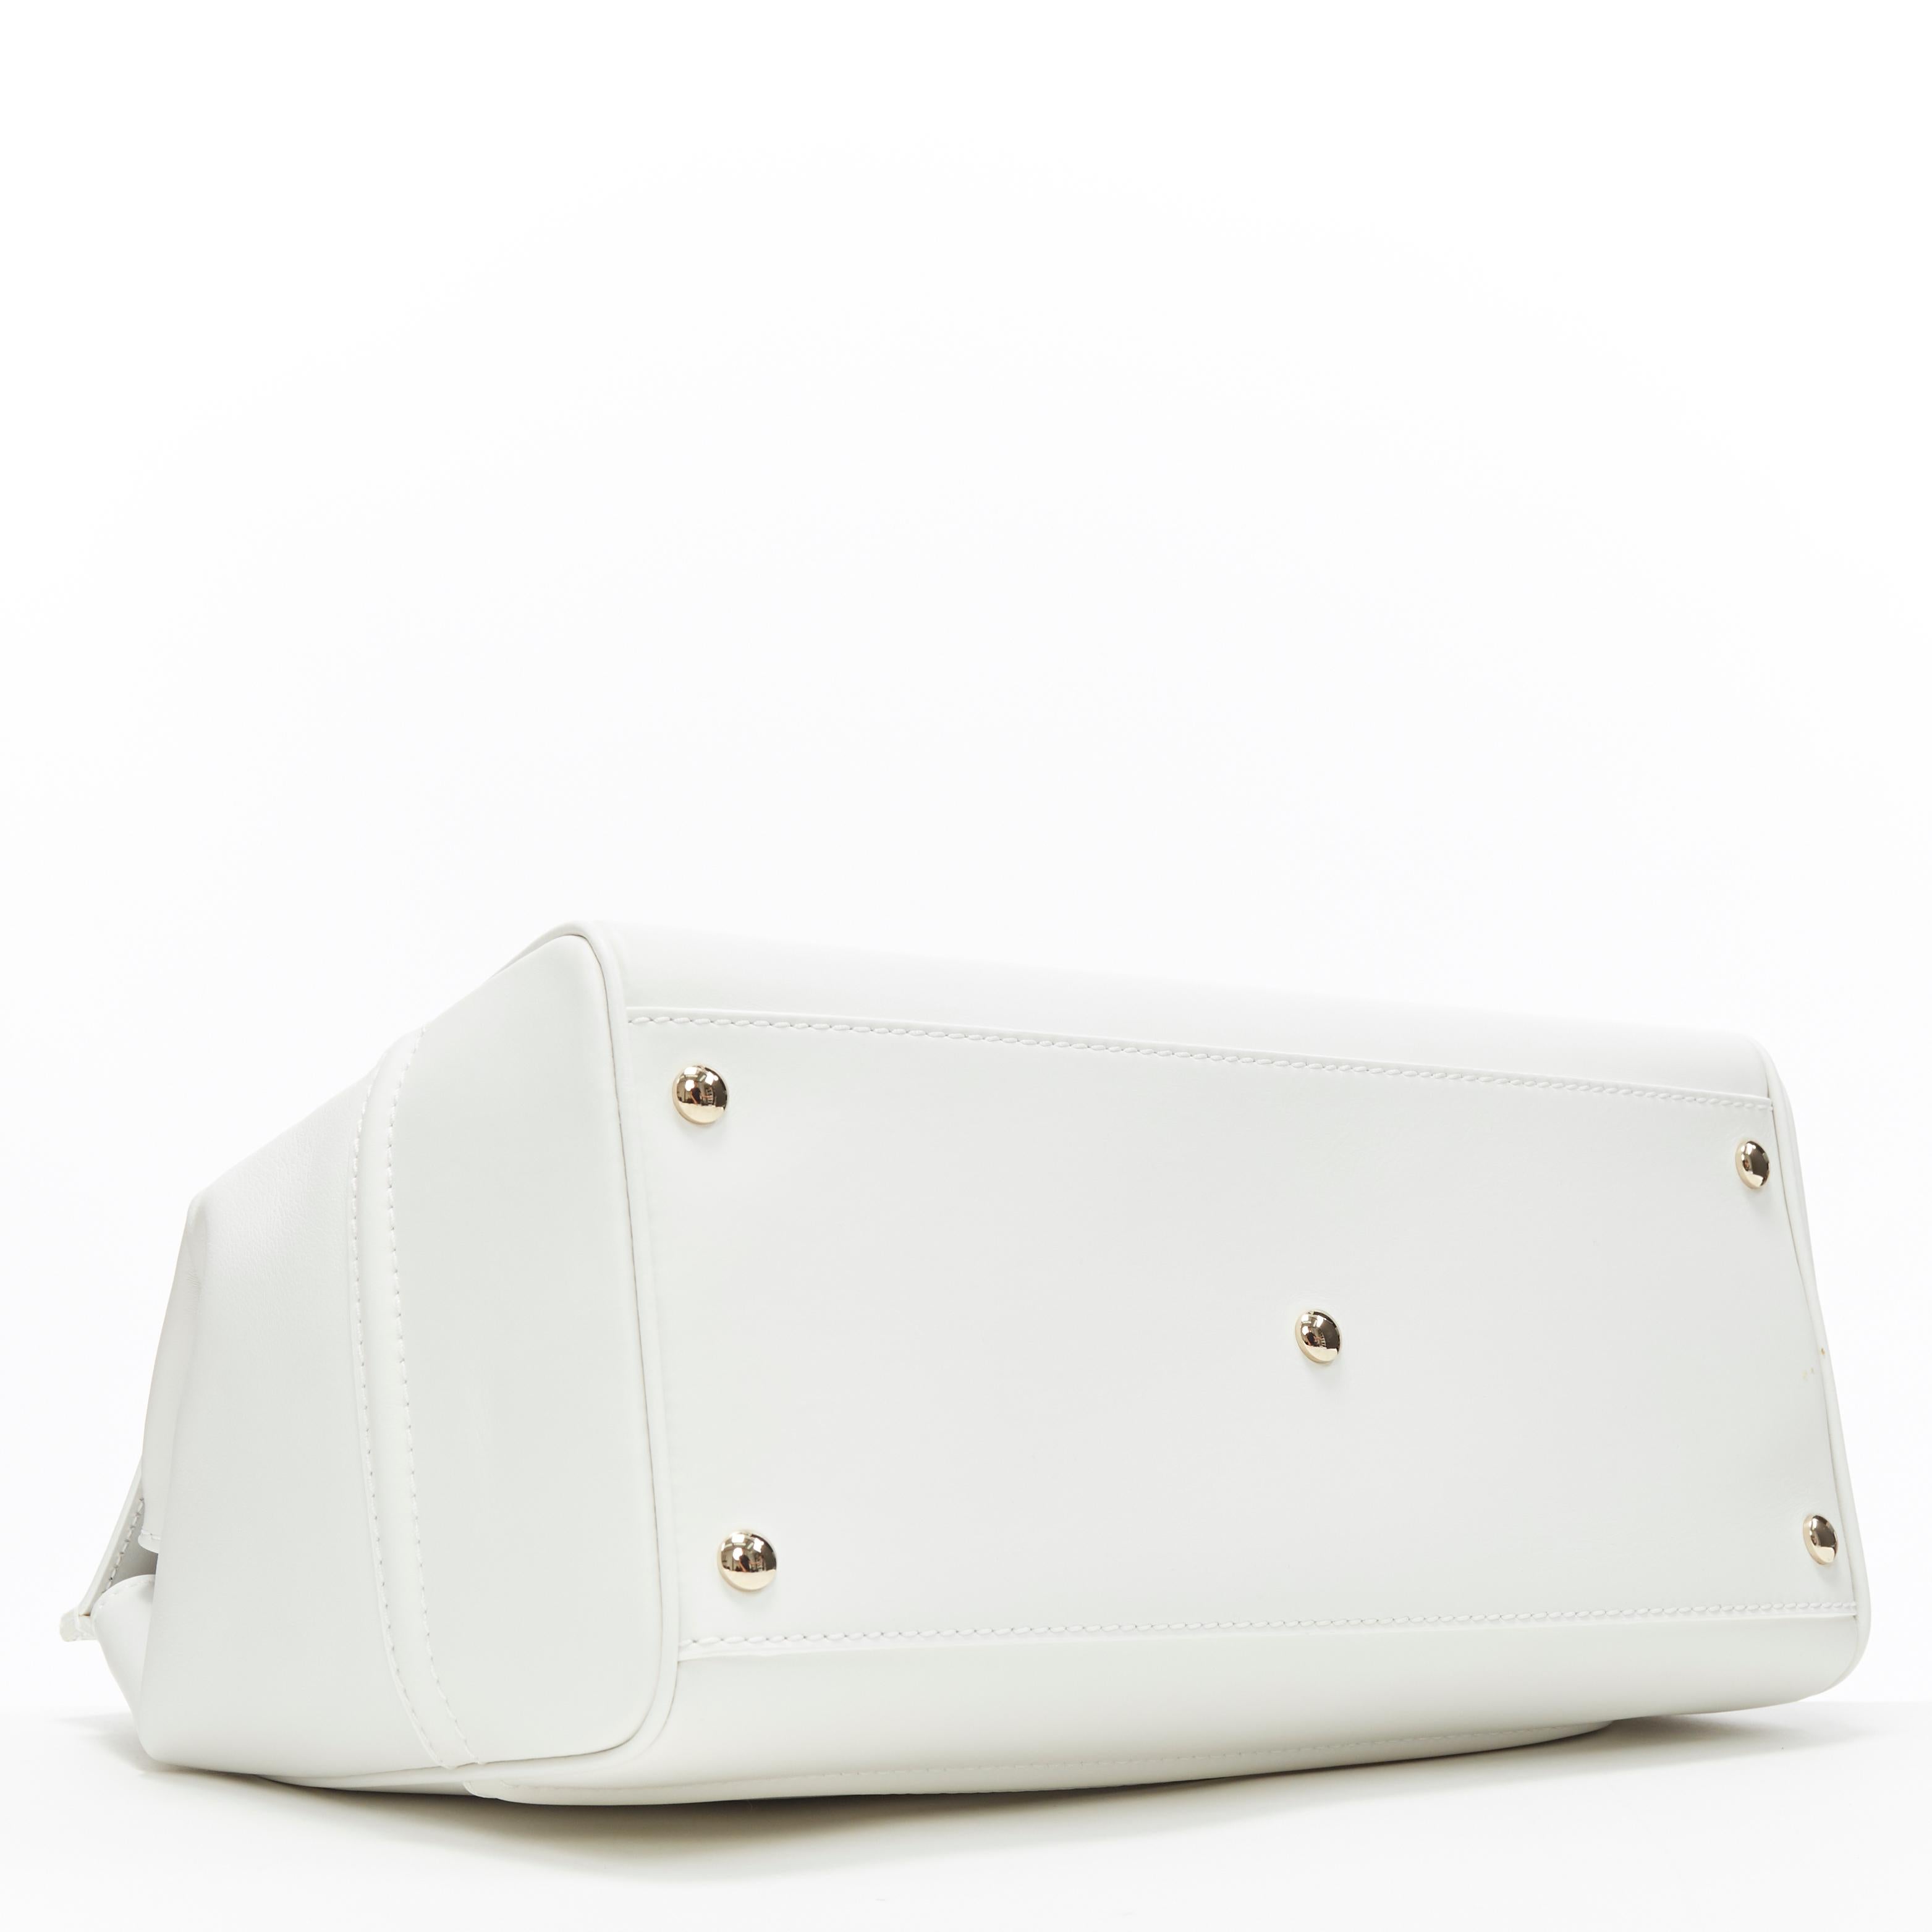 Women's rare VERSACE new Palazzo Empire Large white calf leather Medusa satchel bag